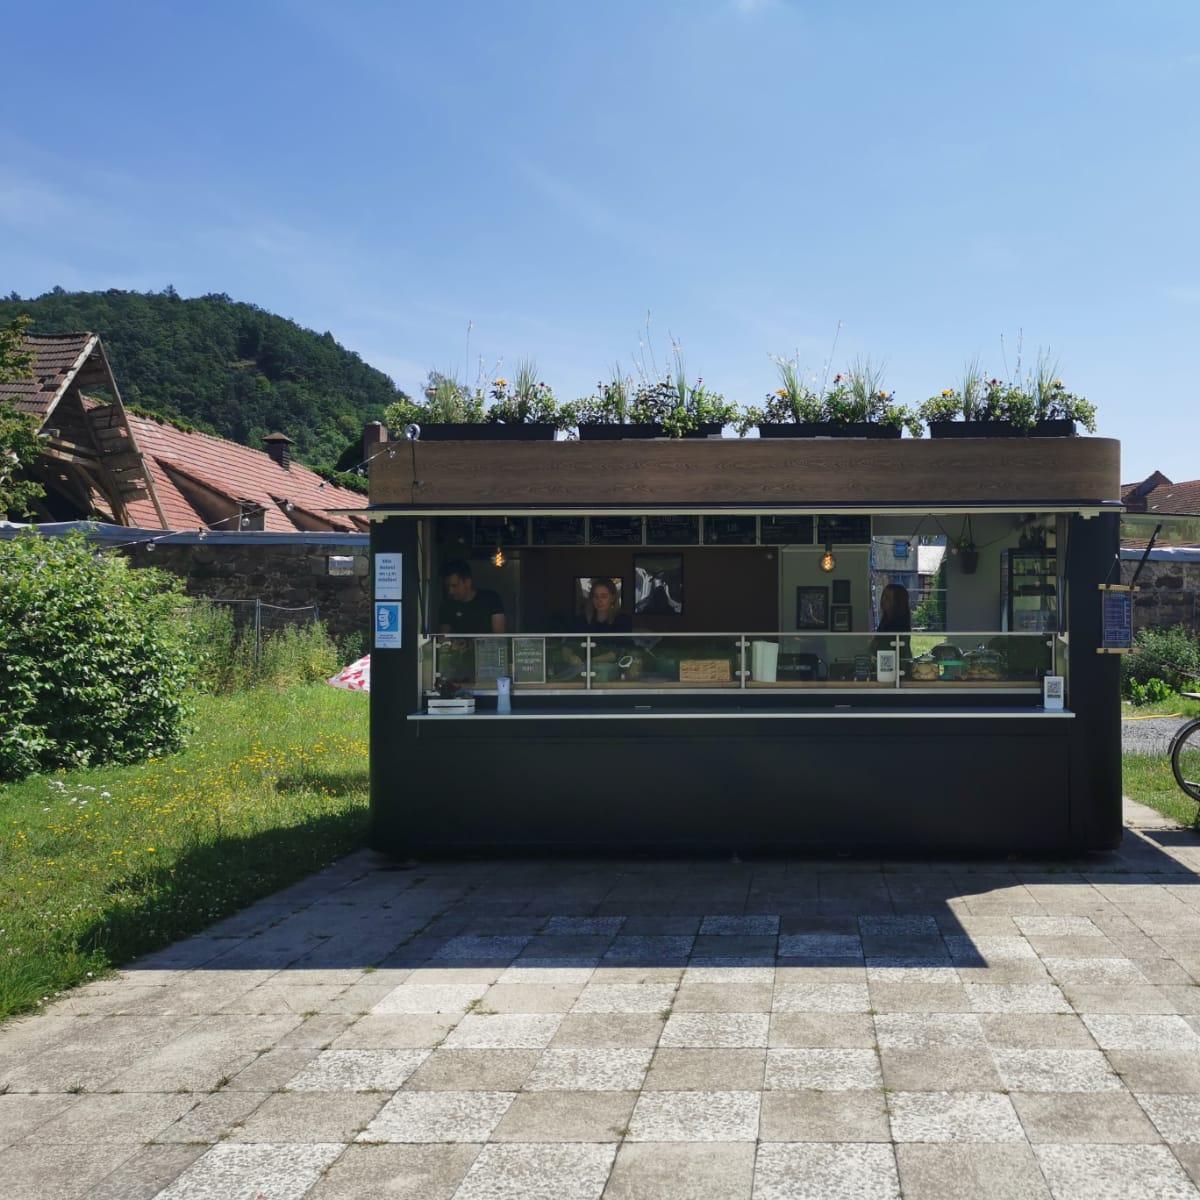 Restaurant "Riders FoodBox" in Ebelsbach